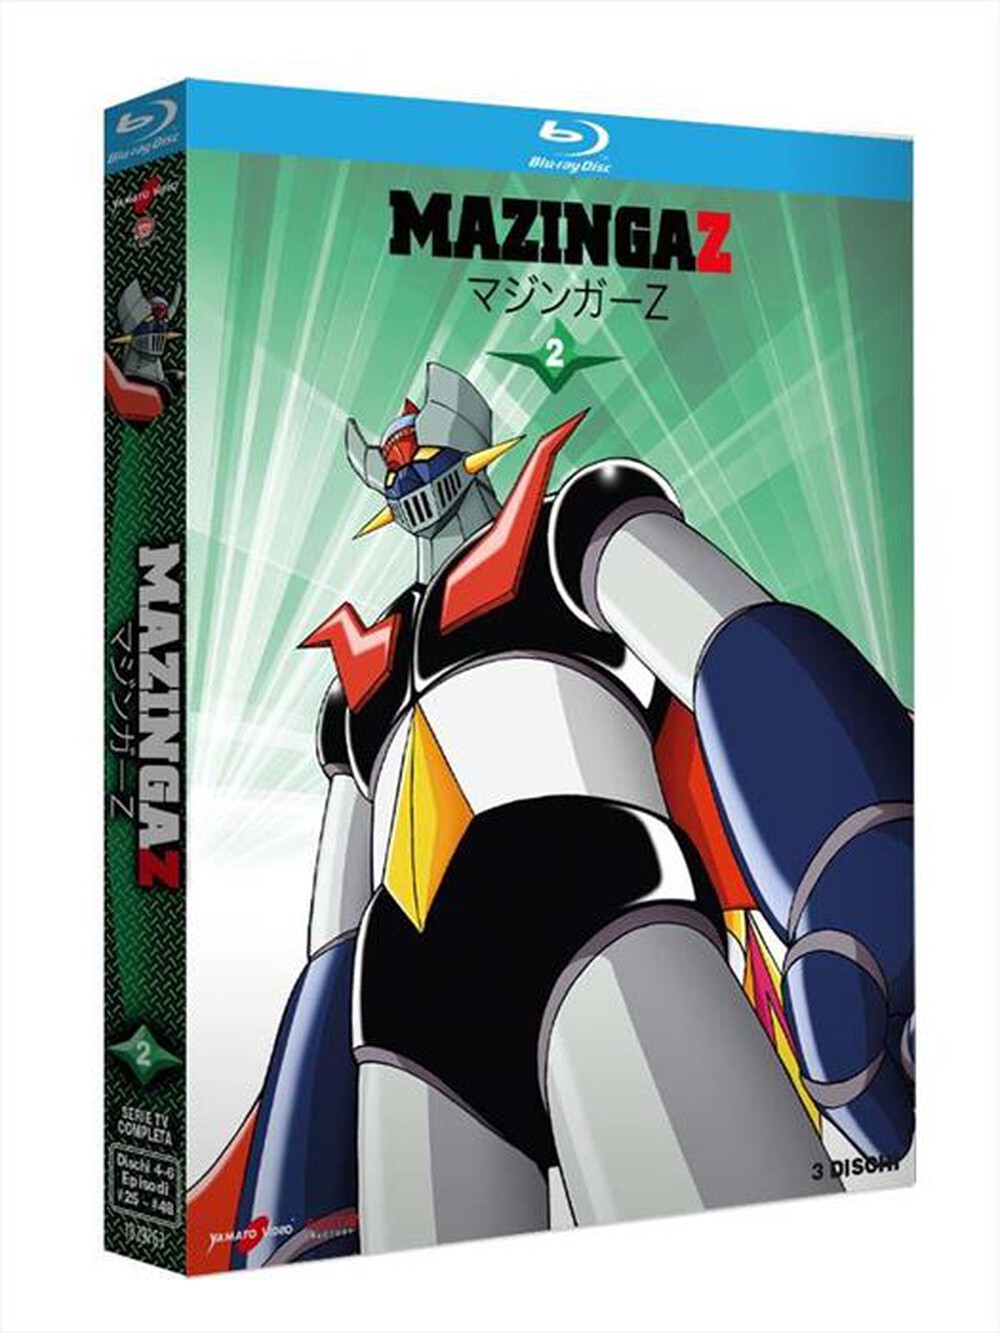 "Anime Factory - Mazinga Z #02 (3 Blu-Ray)"